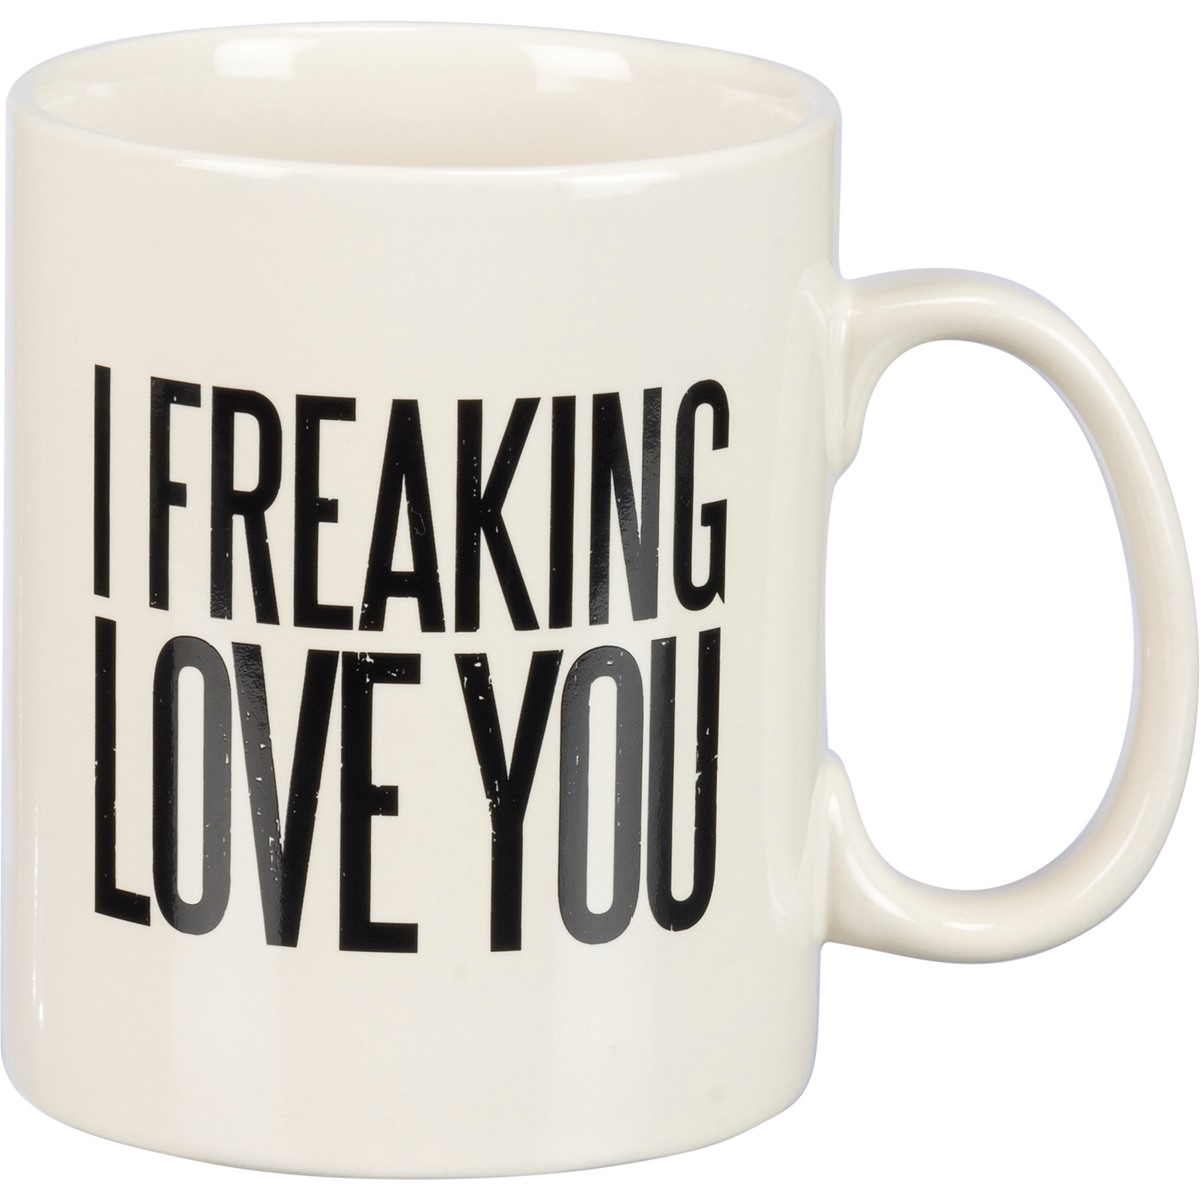 Freaking Love You Mug - Stoneware